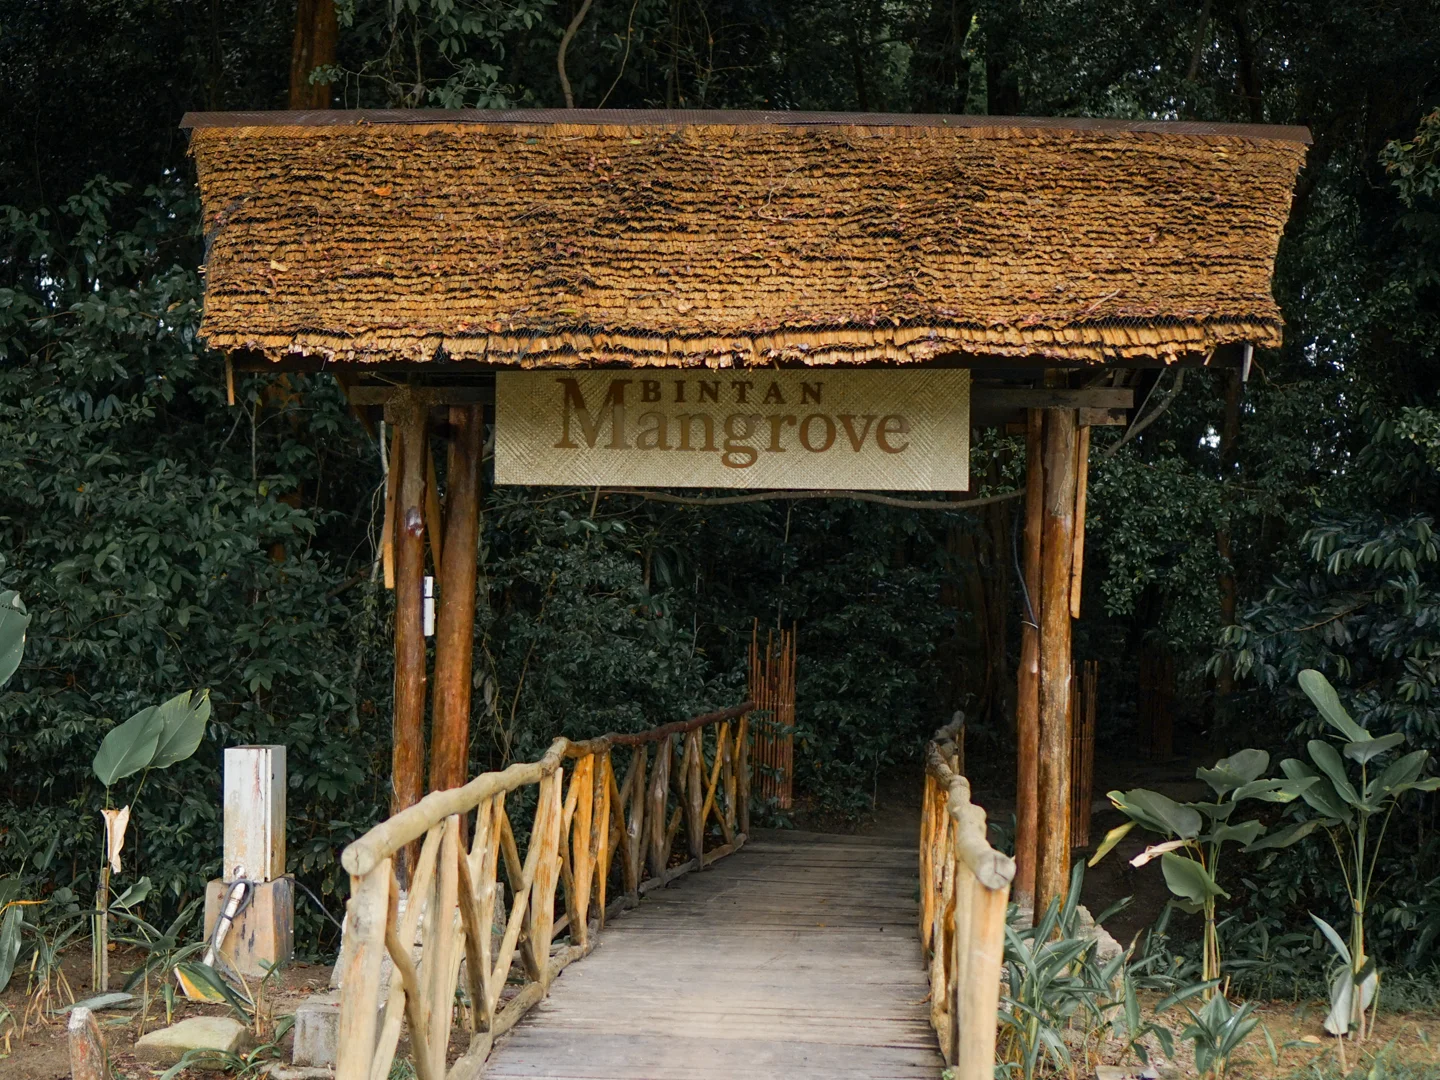 Mangrove Gate